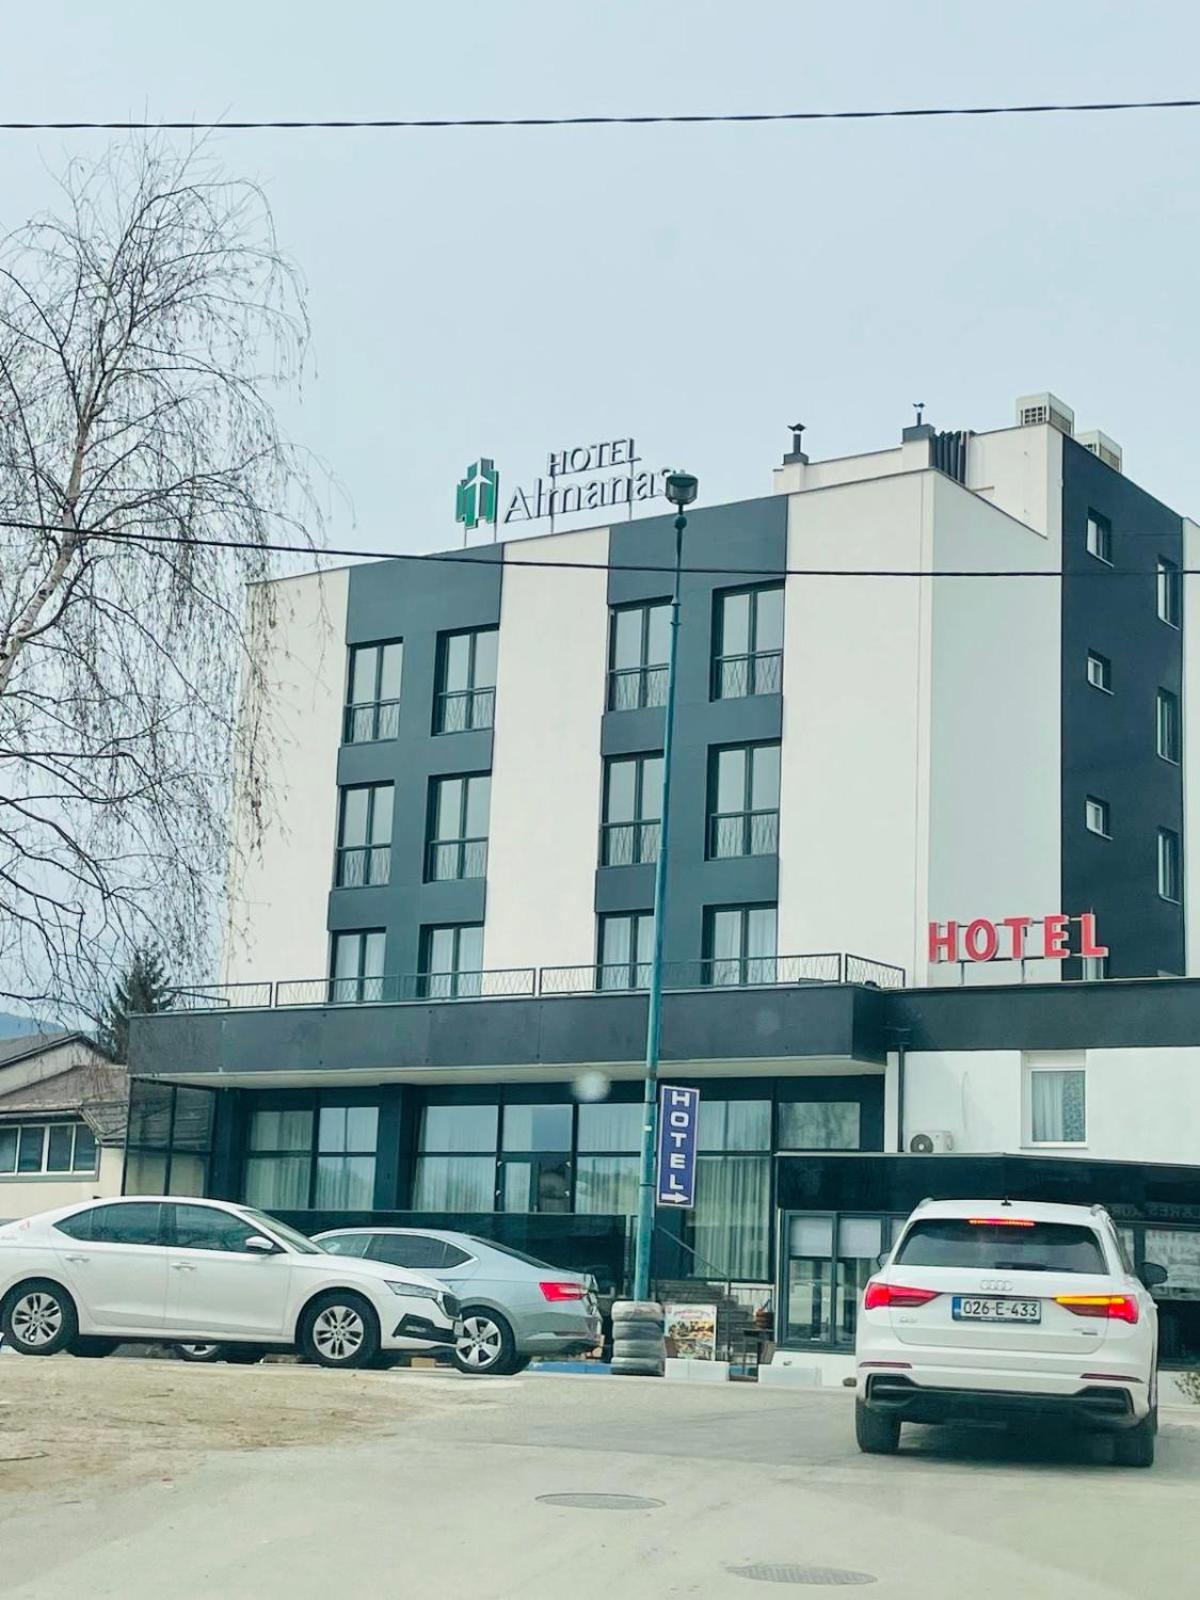 Hotel Suljovic